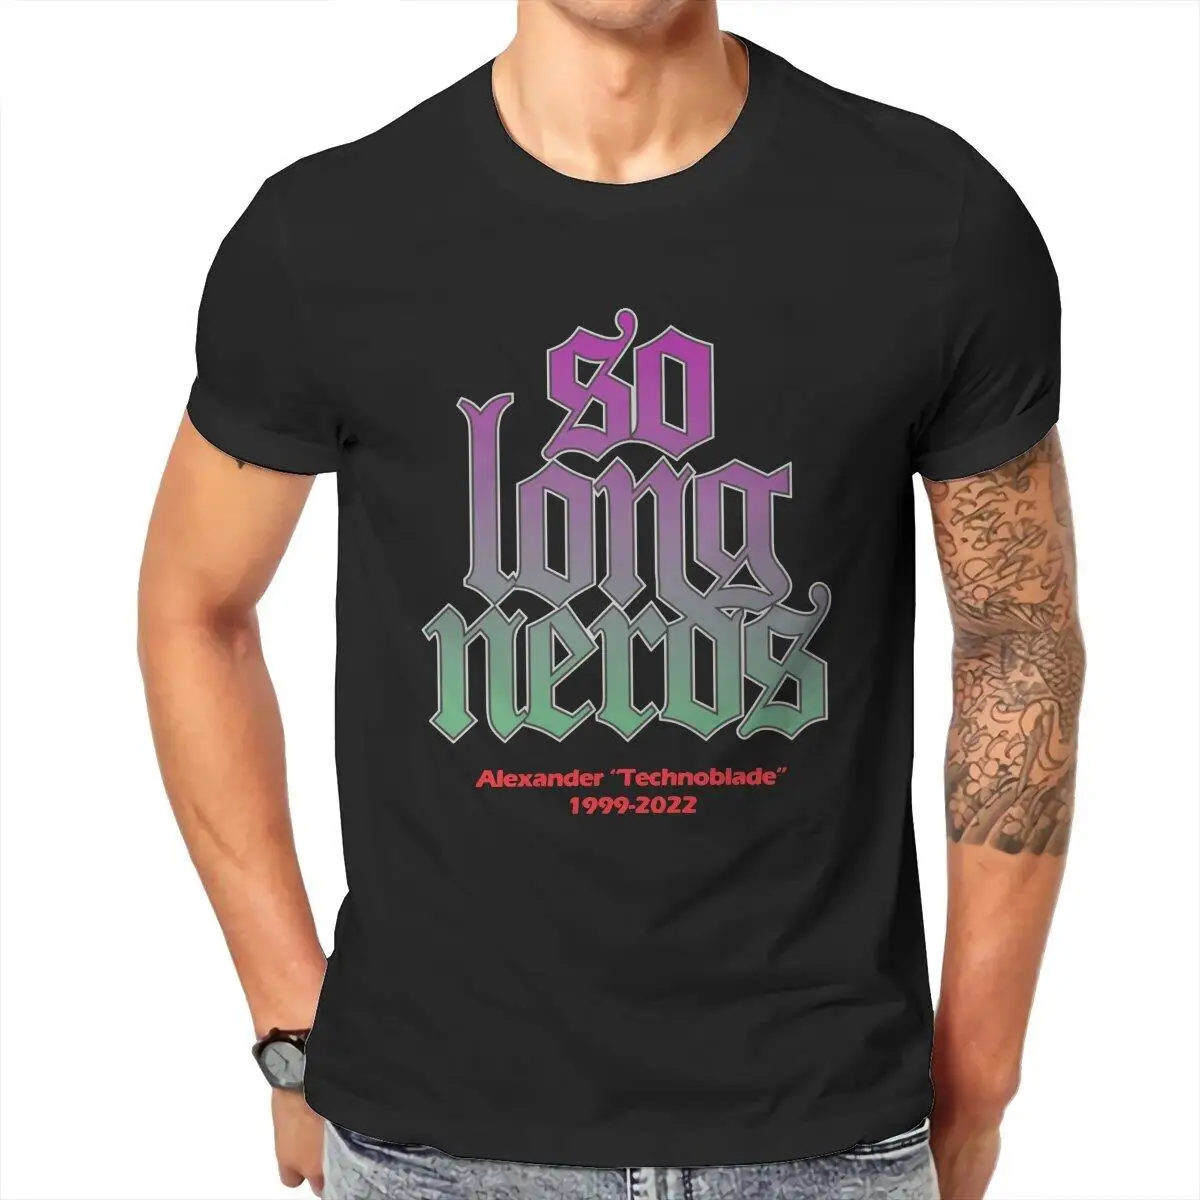 So Long Nerds T-Shirts Men Technoblade Miss You Funny Cotton Tees Crewneck Short Sleeve T Shirts Big Size Tops